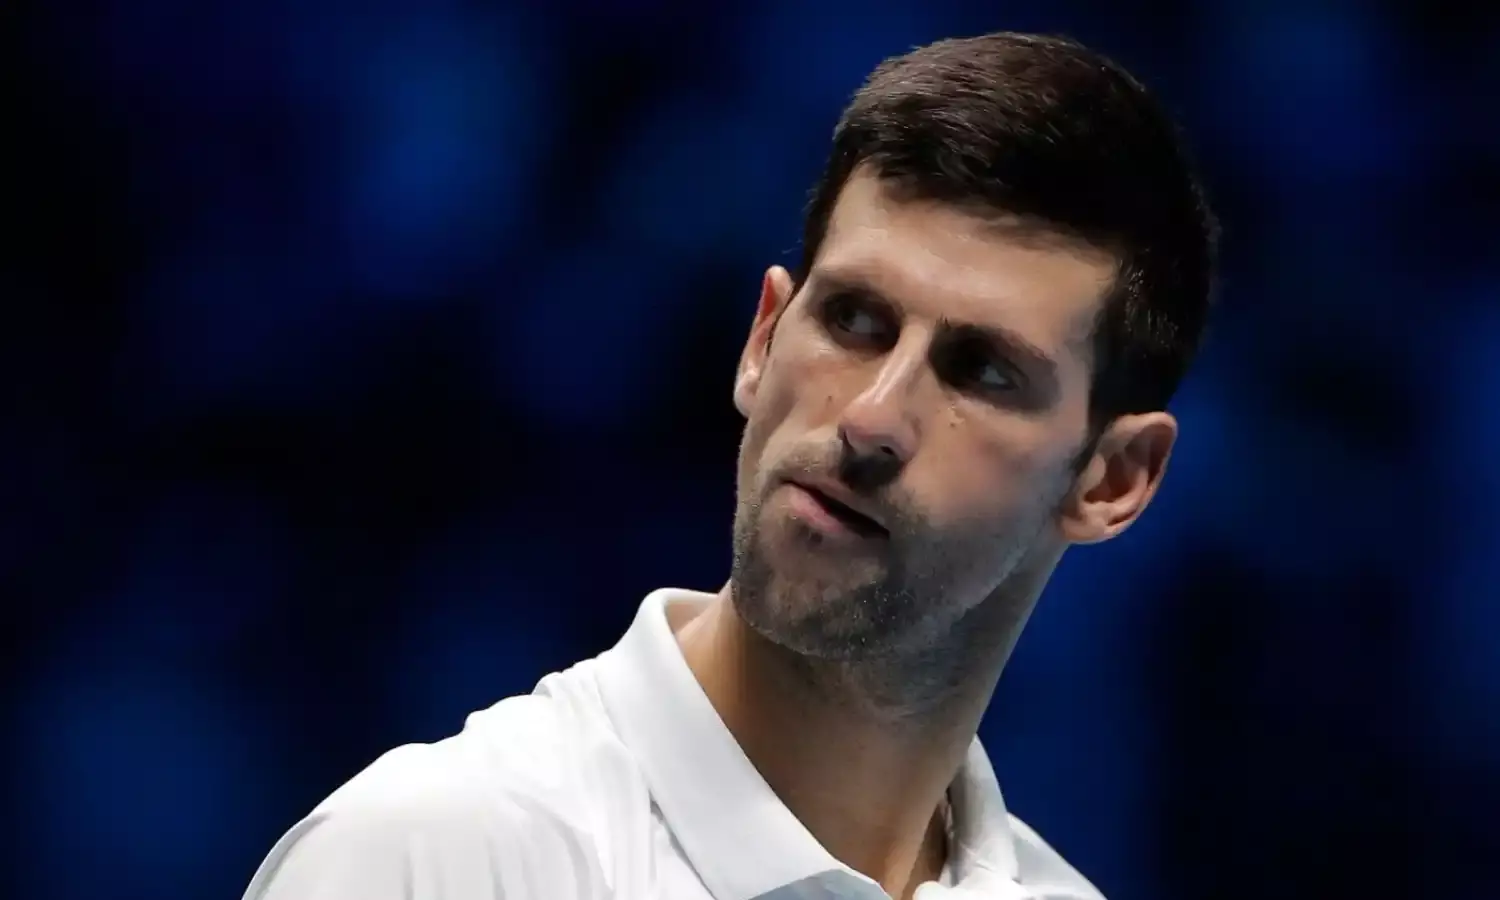 Novak Djokovic Arrested: टेनिस खिलाड़ी नोवाक जोकोविच फिर पुलिस हिरासत में, ऑस्ट्रेलियन ओपन में भाग ले पाना मुश्किल